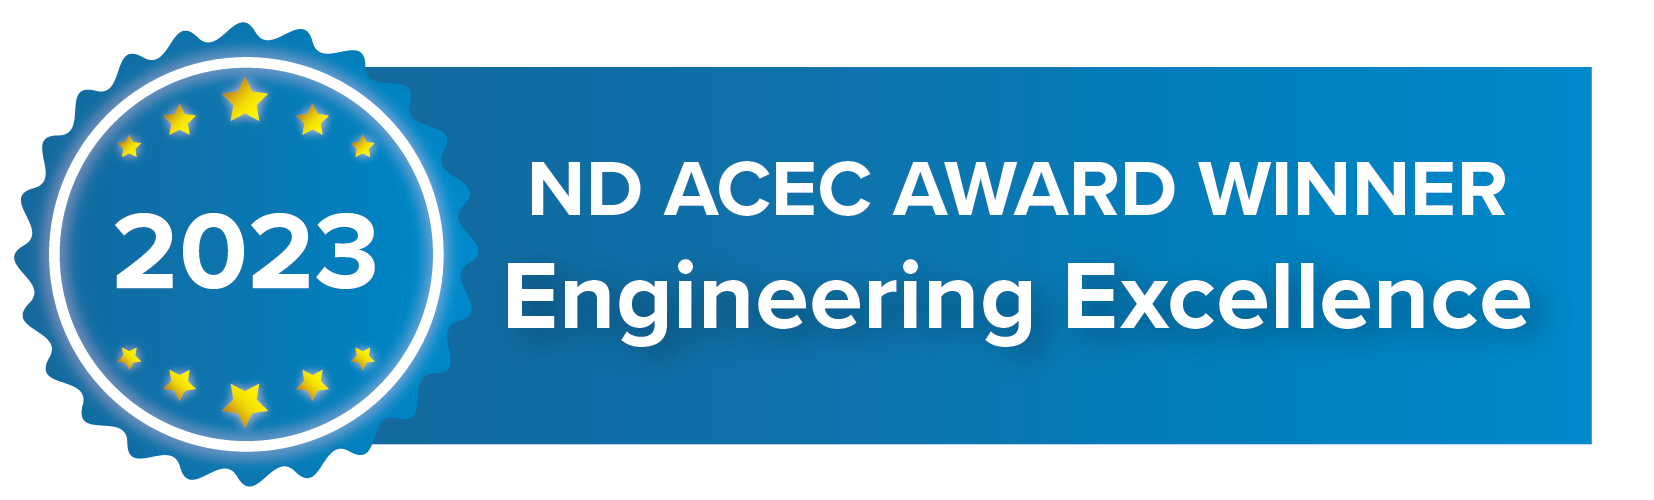 ND ACEC Engineering Excellence Award Winner